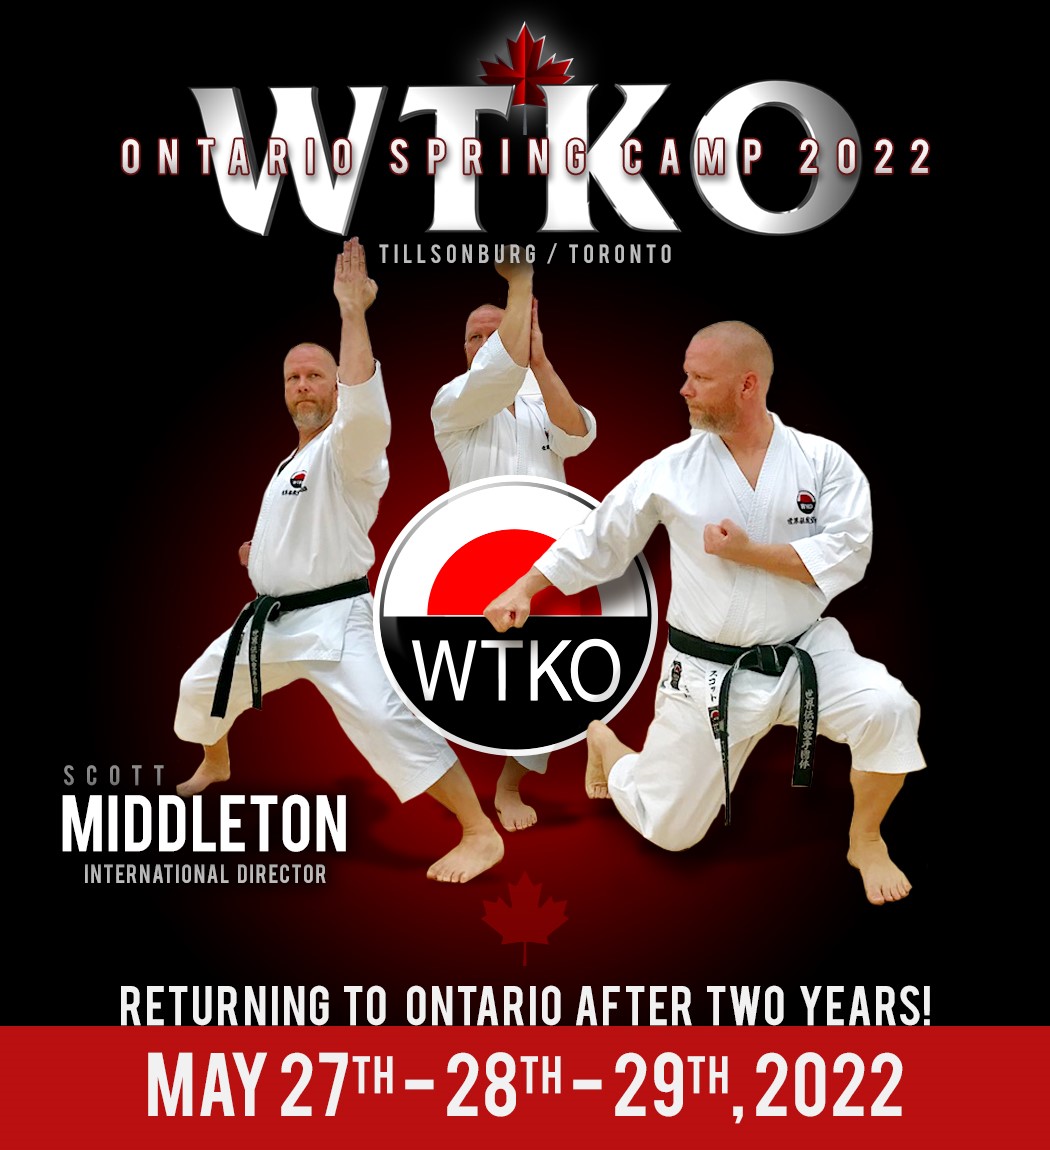 WTKO Ontario Spring Camp 2022 - Tillsonburg / Toronto – Scott Middleton, International Director - Returning to Ontario after Two Years - May 27, 28 and 29, 2022